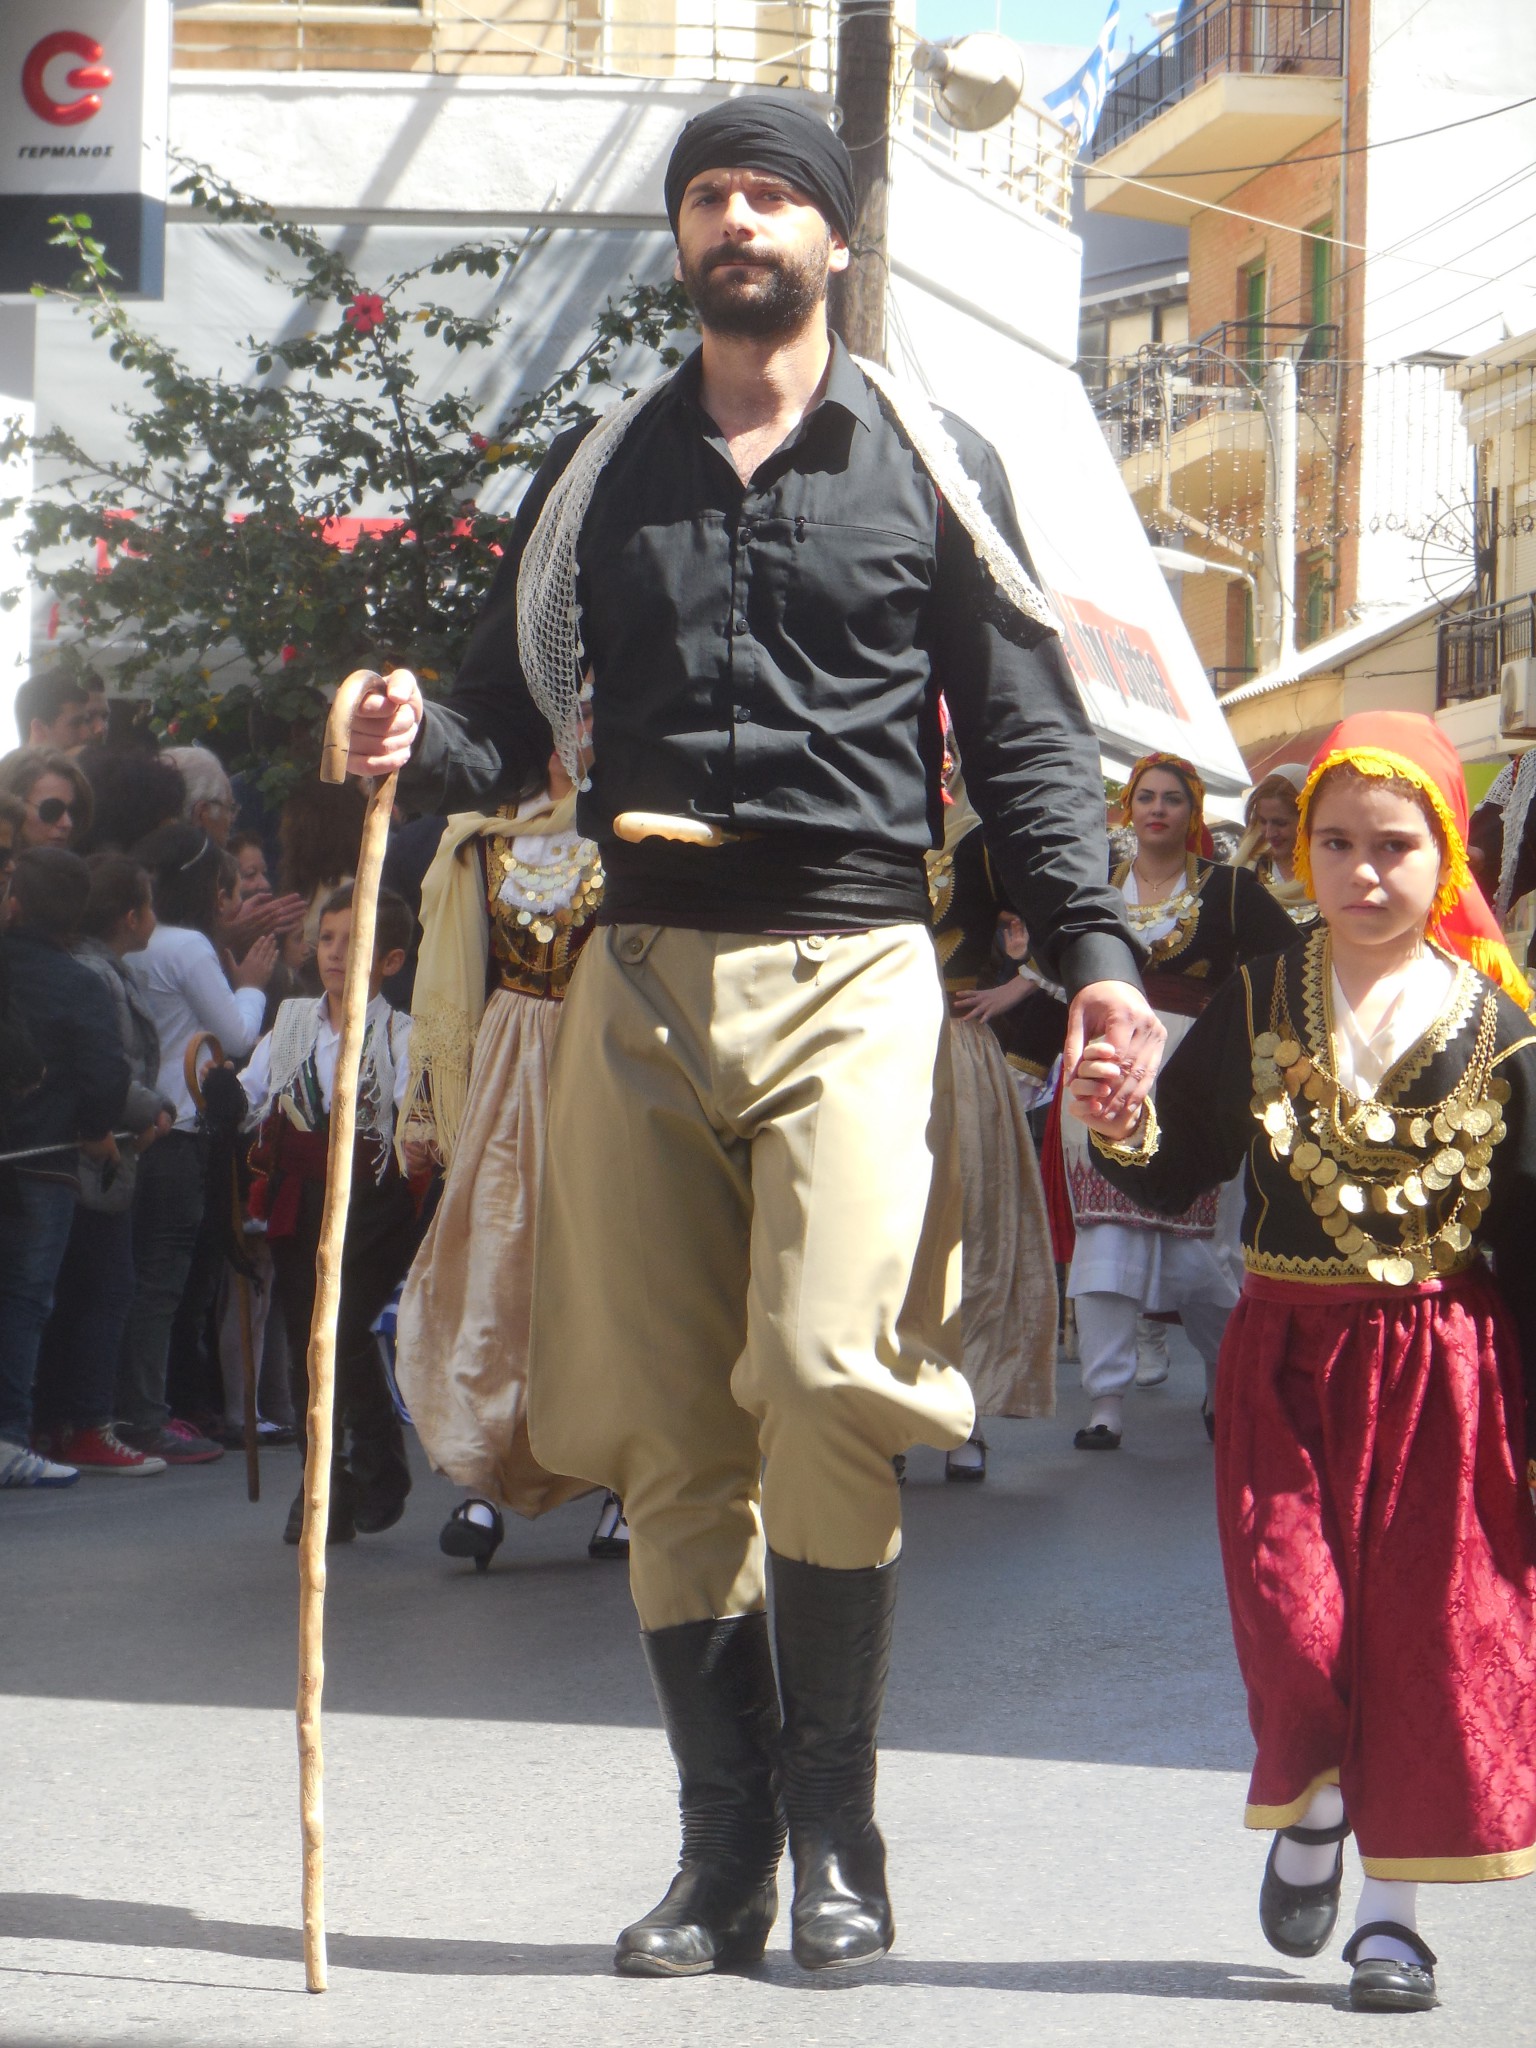 Traditional Cretan costumes.